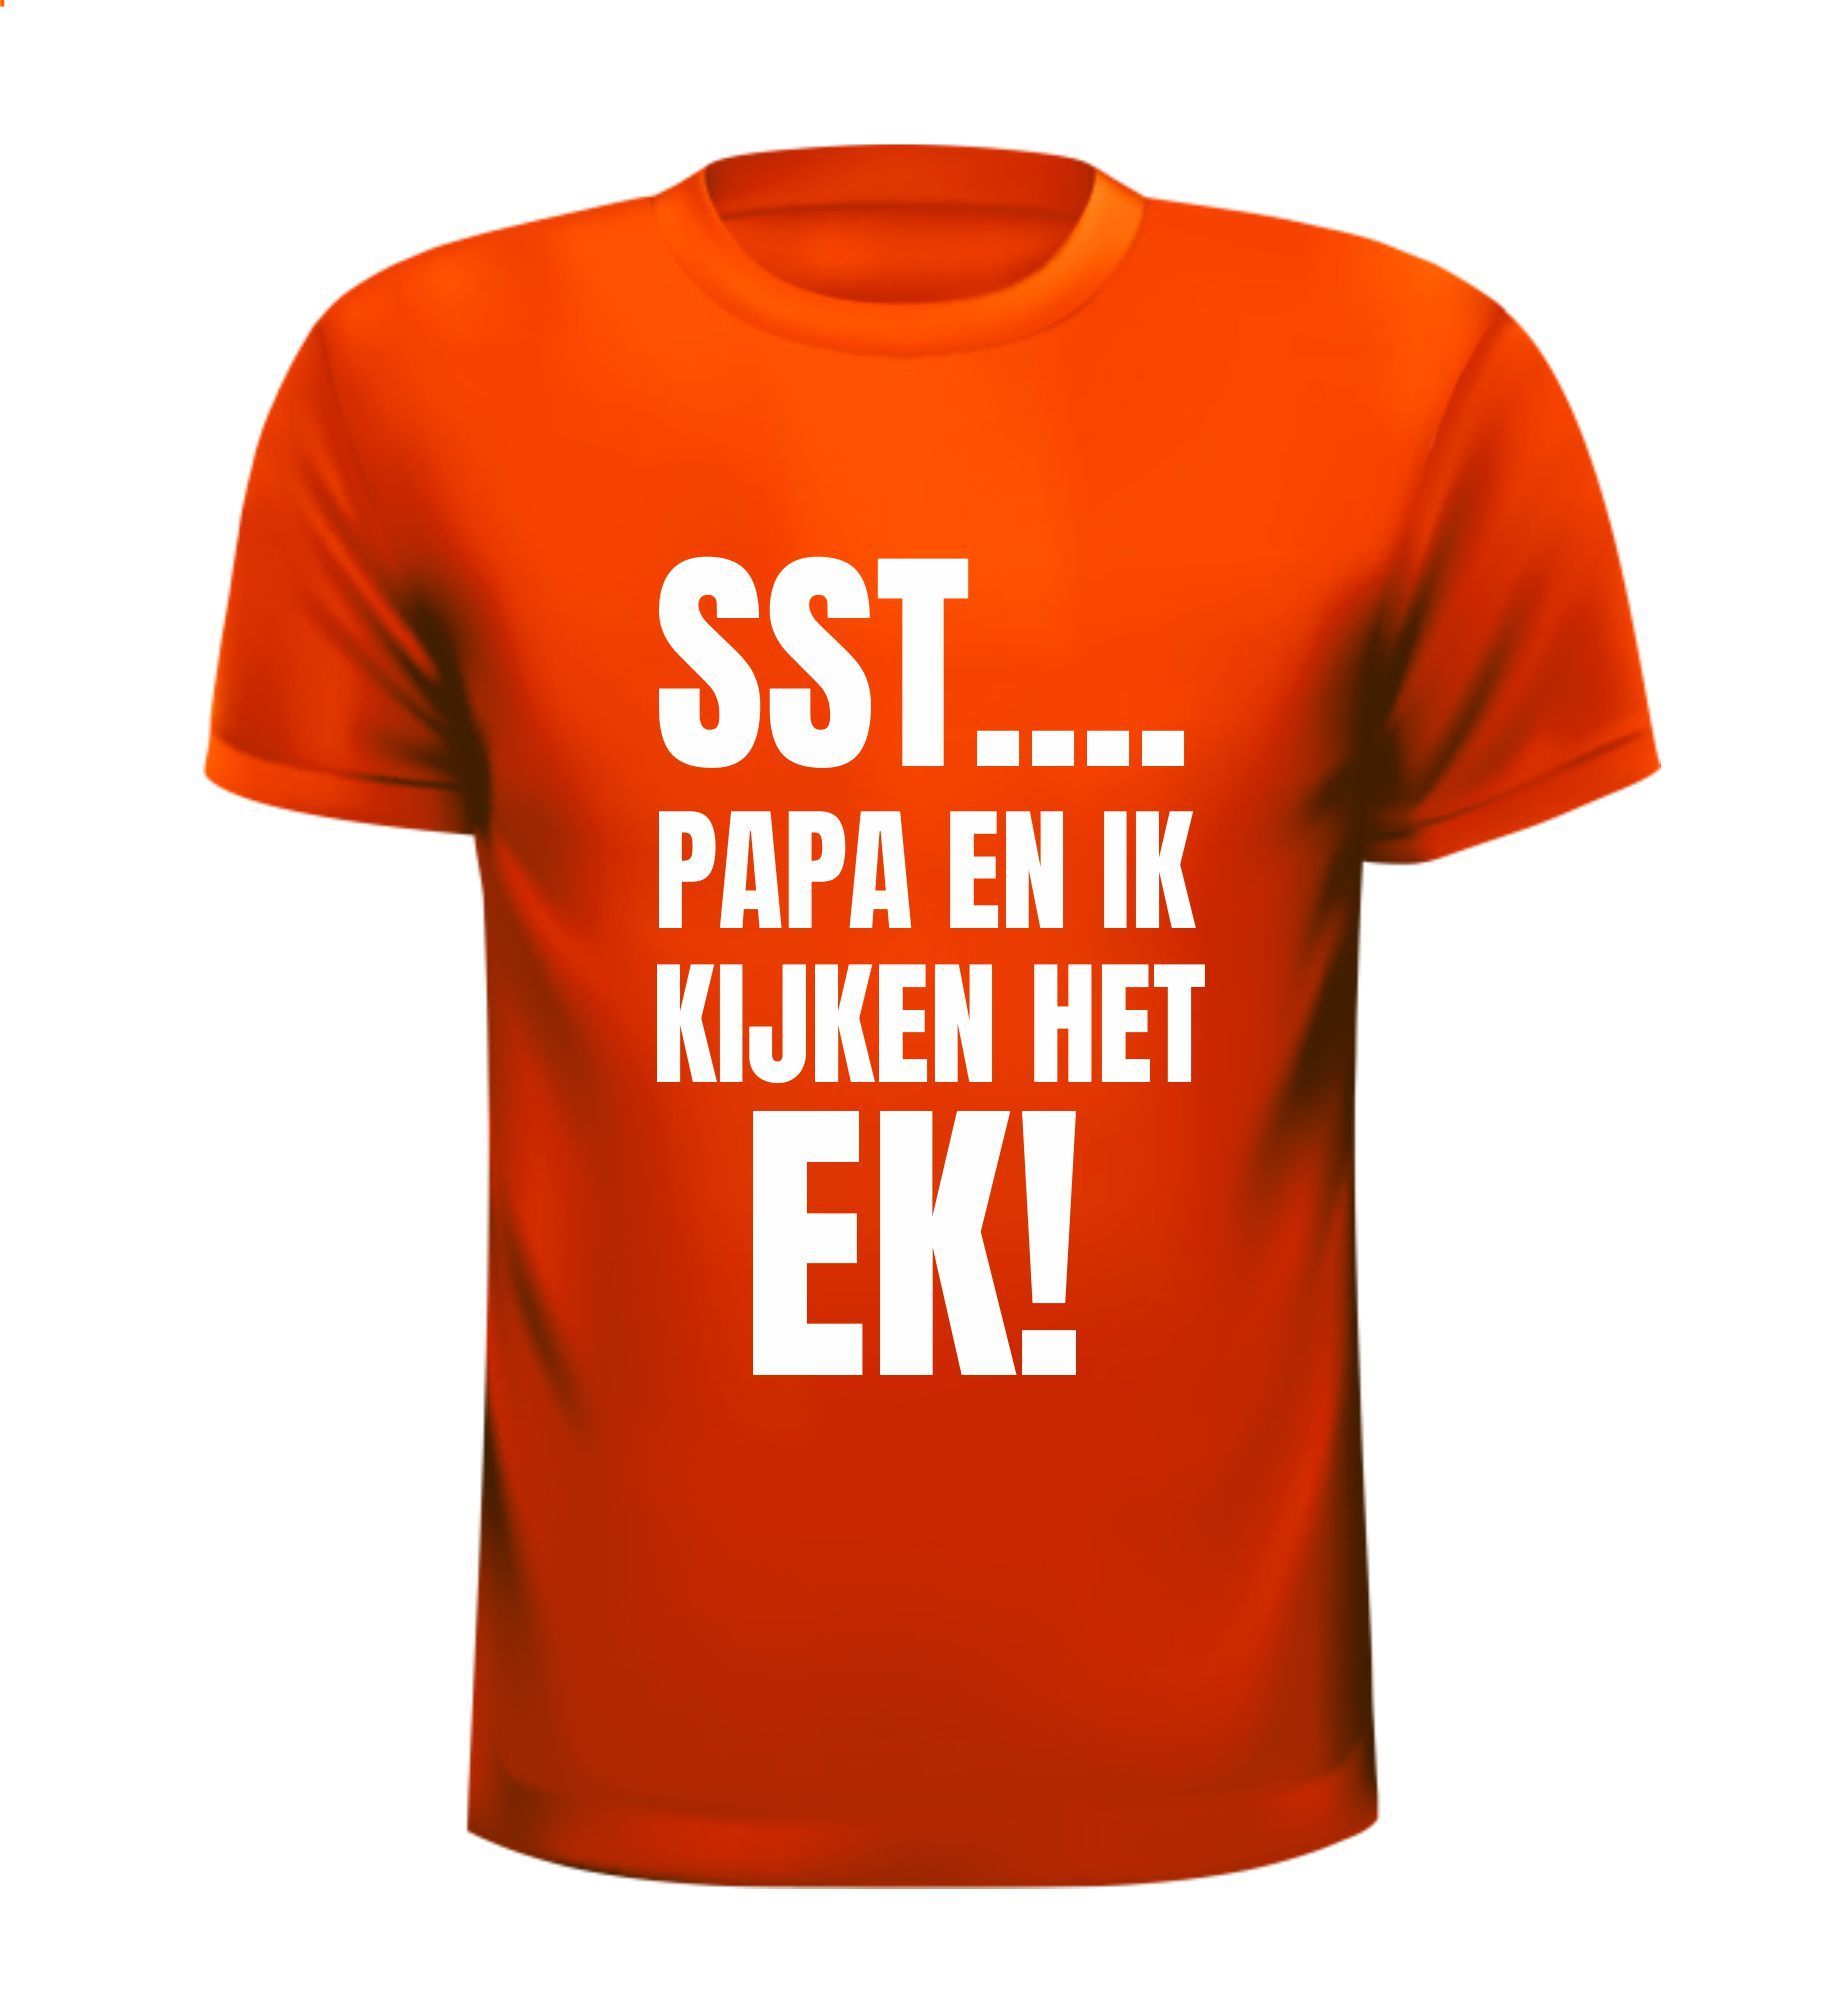 sst papa en ik kijken het EK T-shirt baby shirt kleintje voetbal oranje